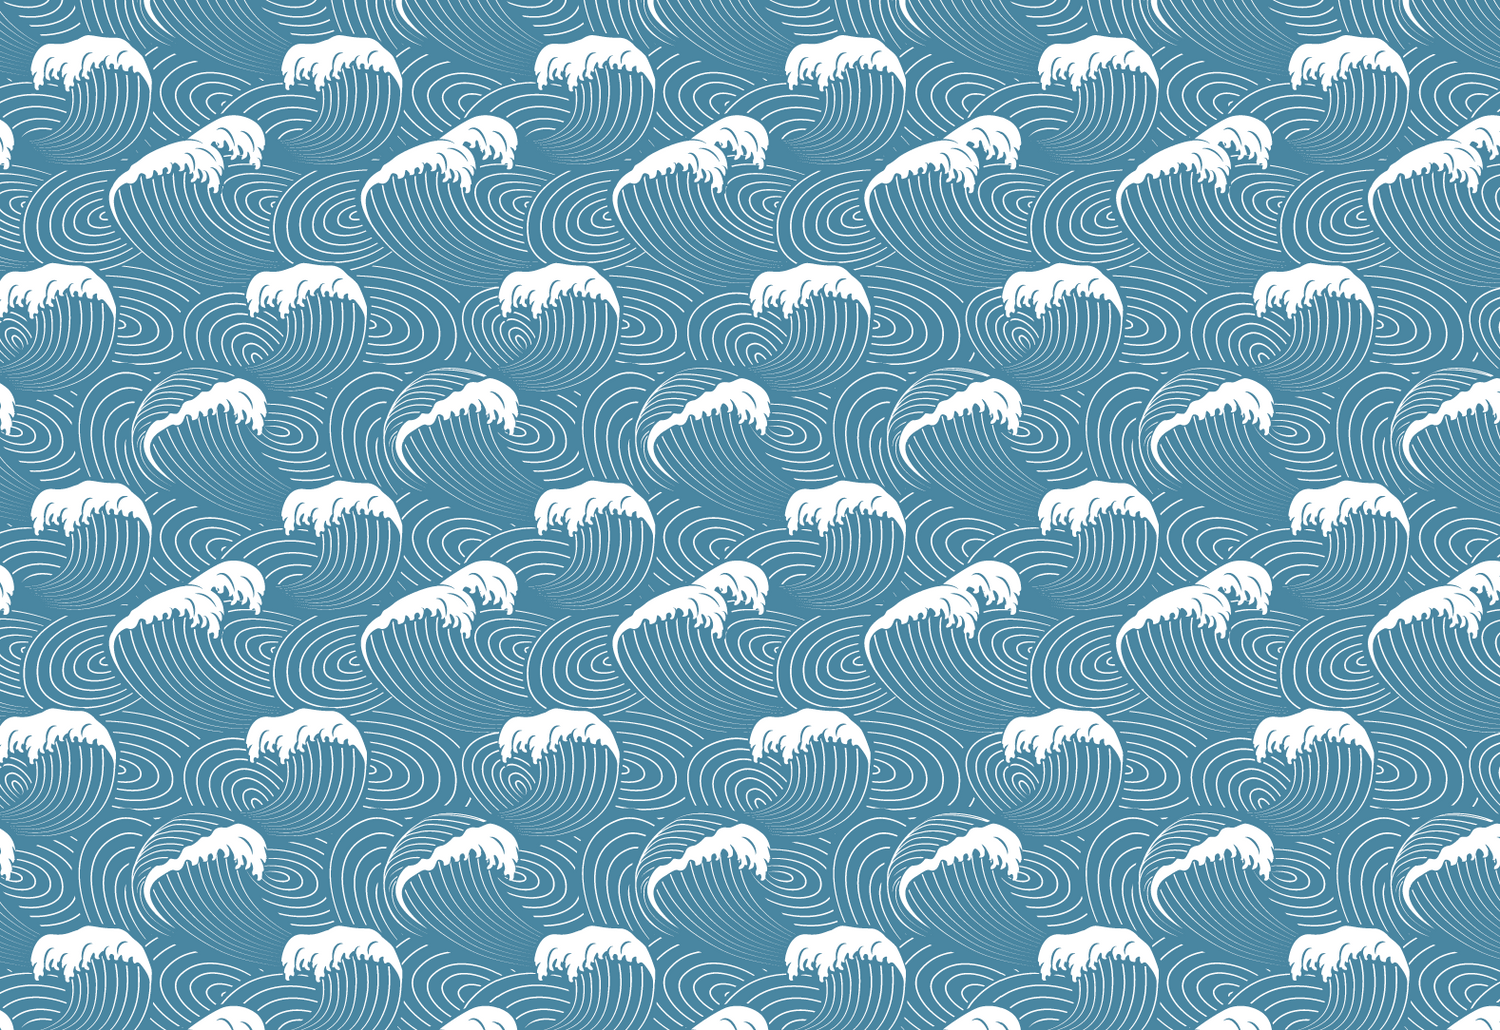 FUSI YAMA repeating wave pattern background image blue